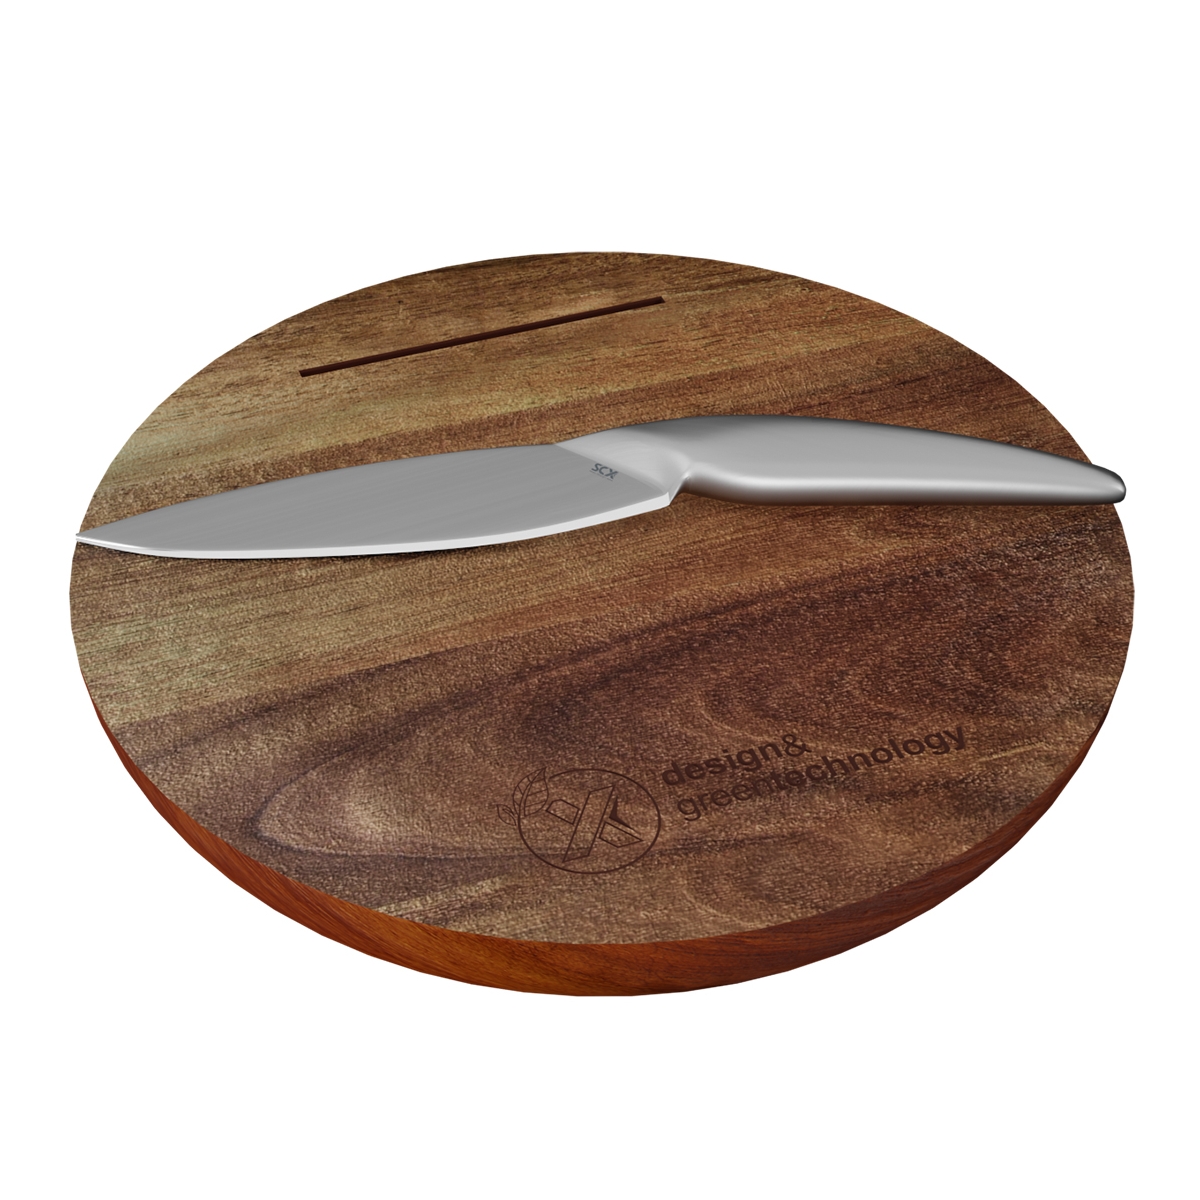 K03 - Cutting board and knife set